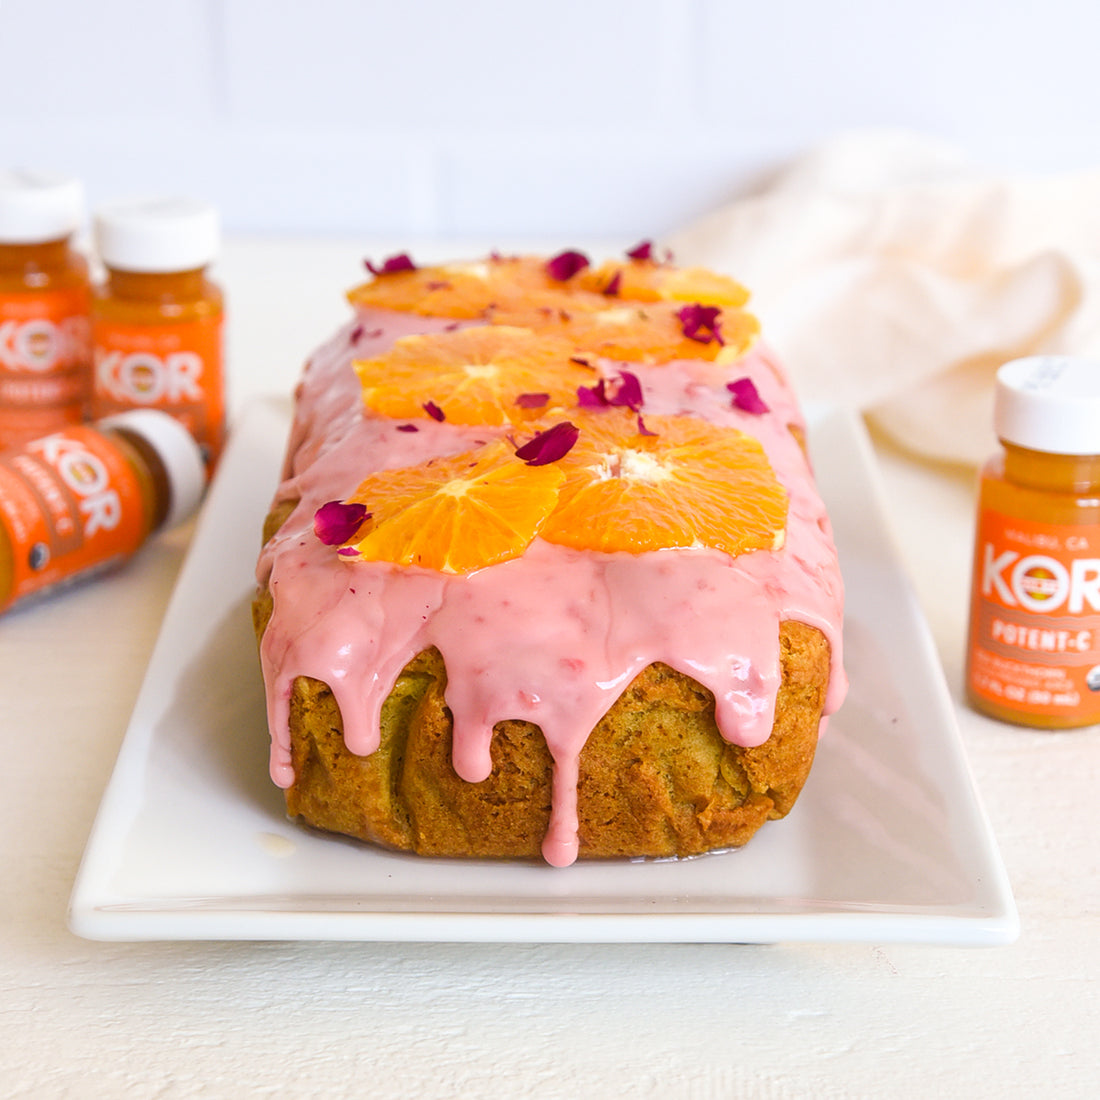 vegan citrus baked dessert loaf on a white background with potent-c shots 